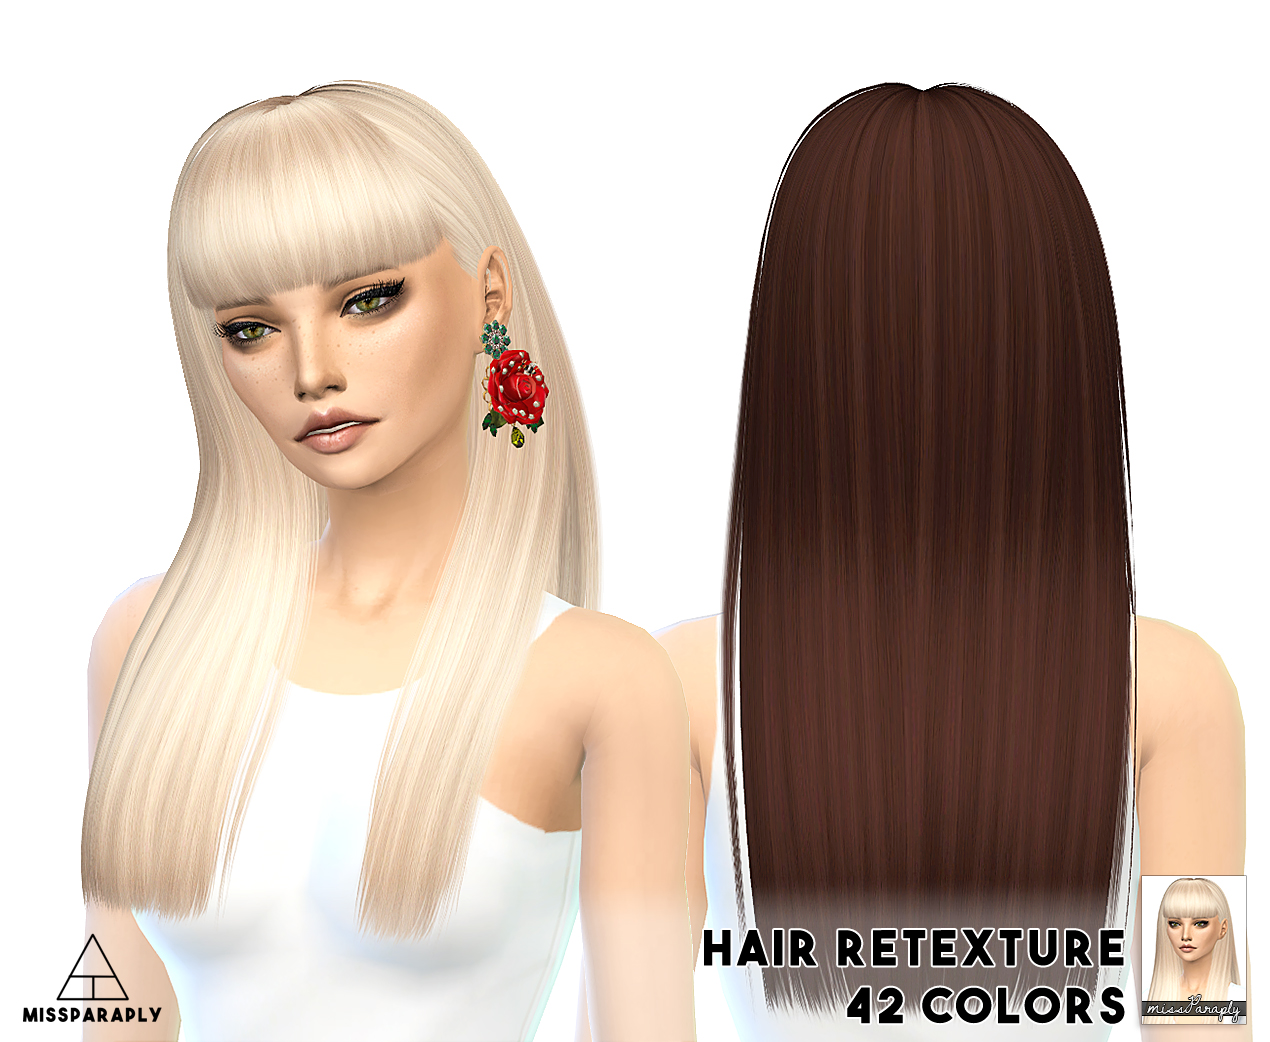 Sims 4 Hairs ~ Miss Paraply: Nightcrawler hairsstyles retextured